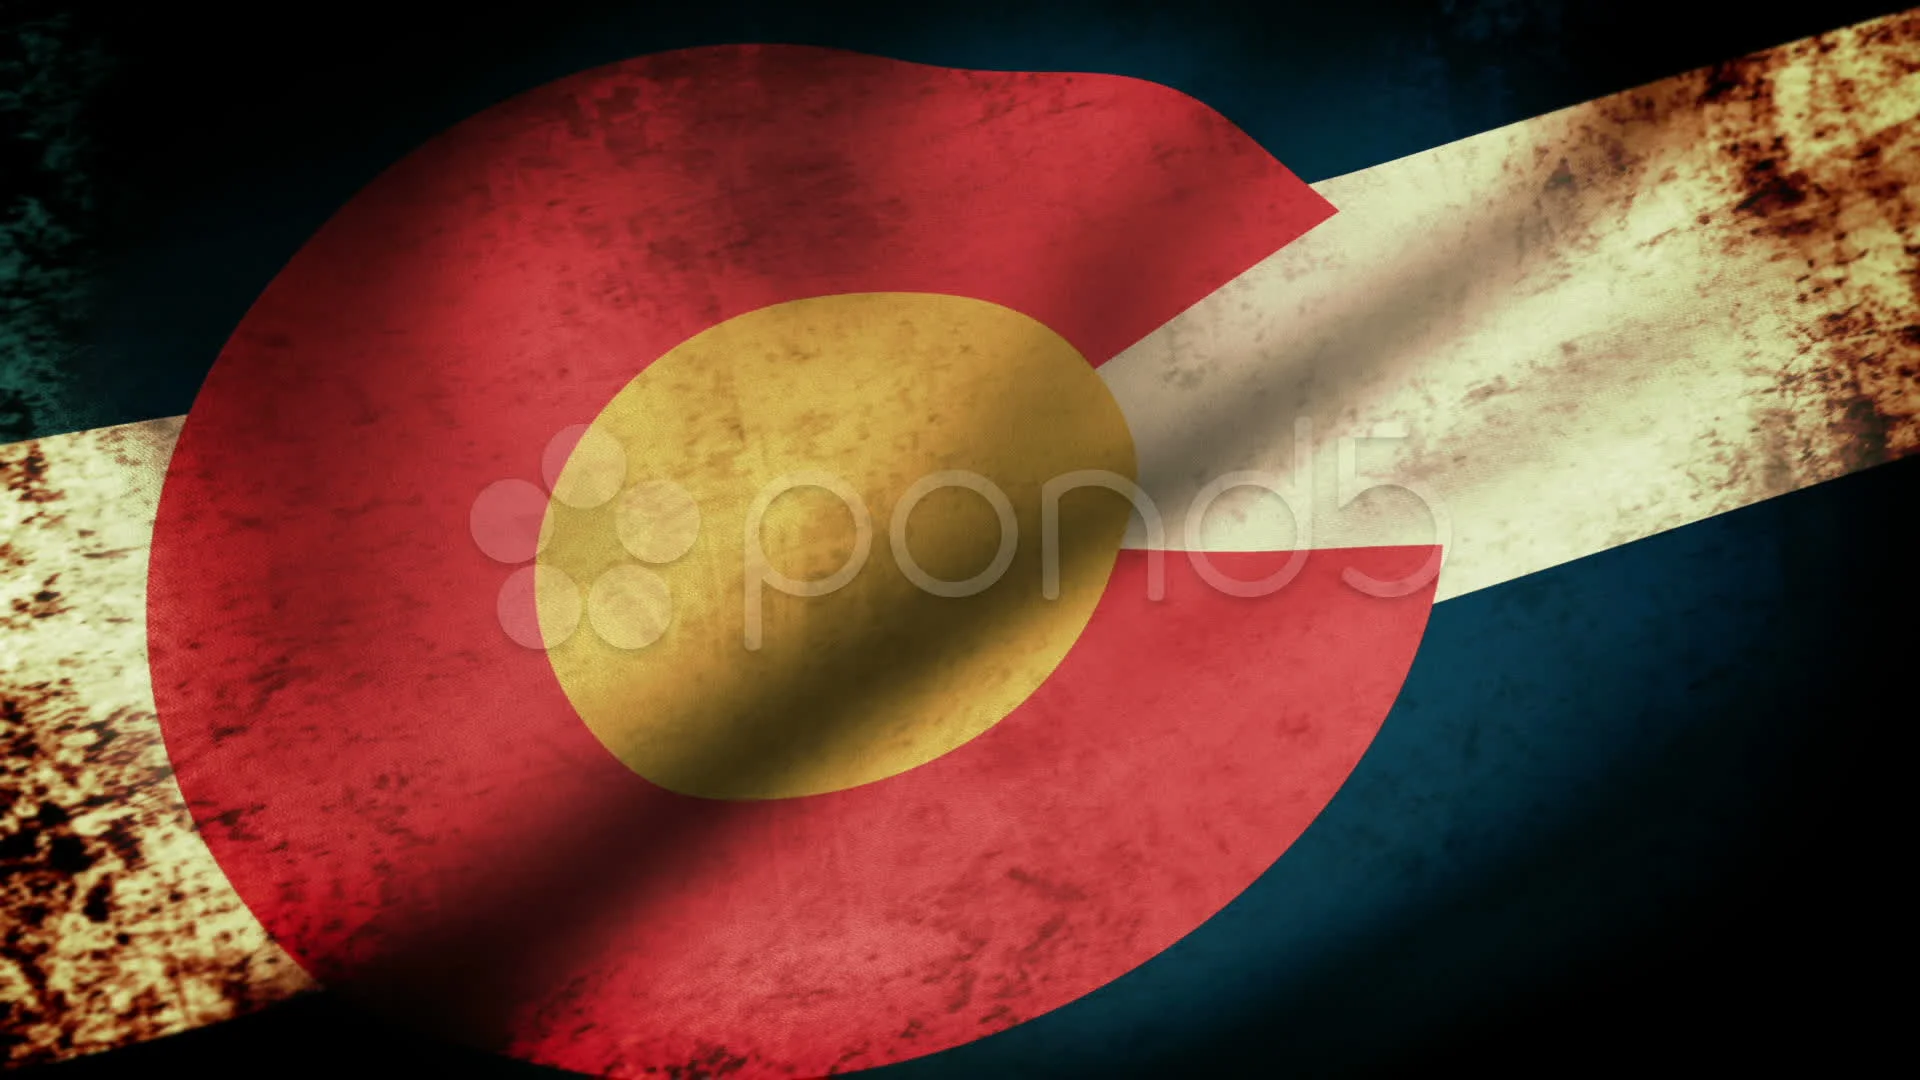 9700 Colorado Flag Images Stock Photos  Vectors  Shutterstock